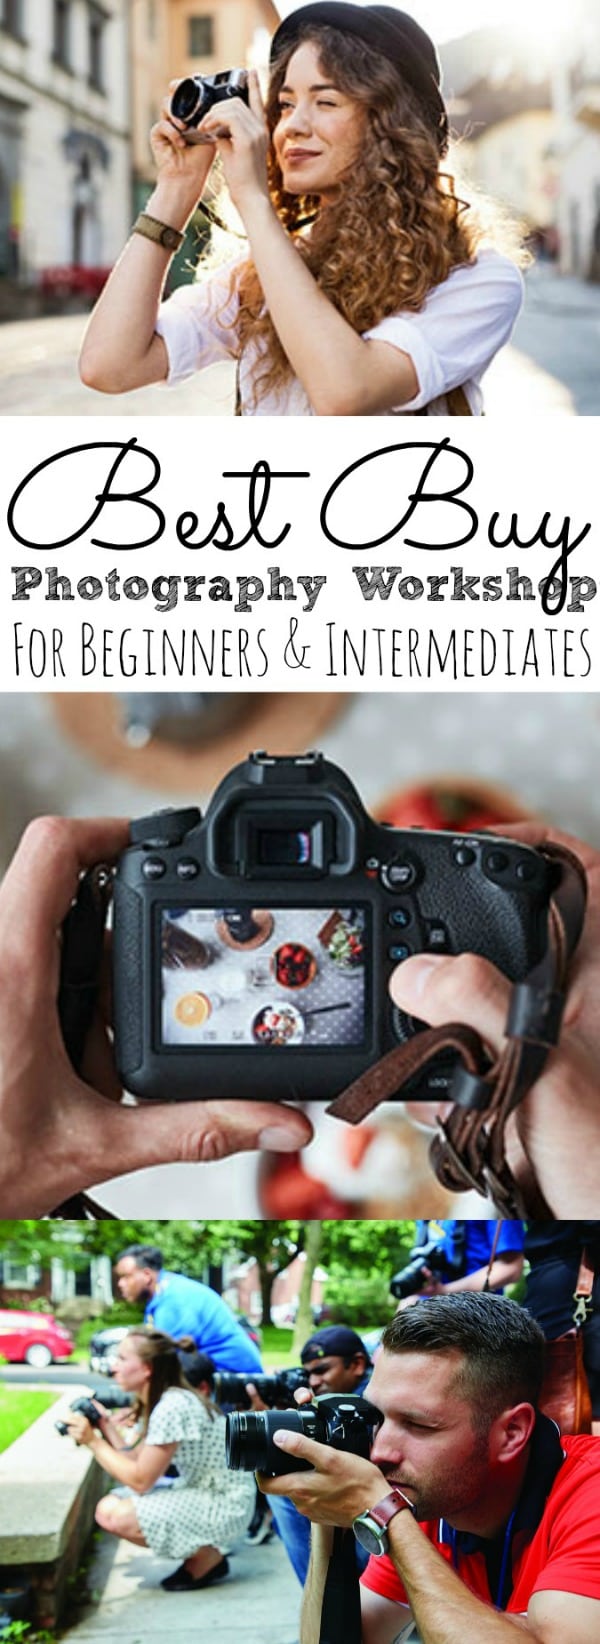 Best Buy Photography Workshops | For Beginners & Intermediates - simplytodaylife.com